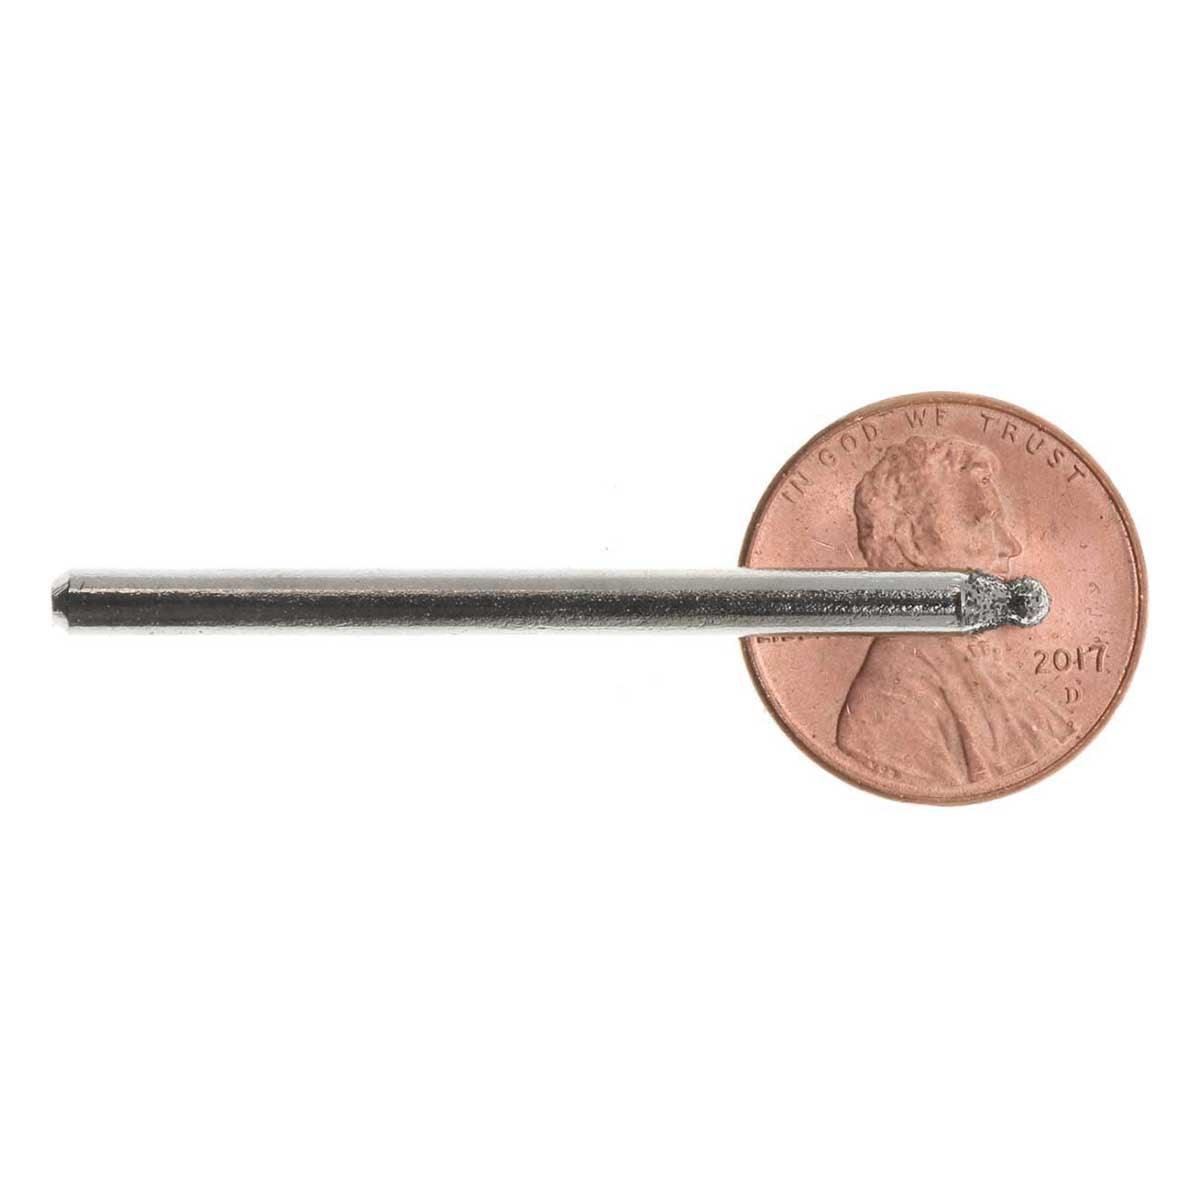 02.3mm 80 Grit Round Diamond Burrs - 2pc - 1/8 inch shank